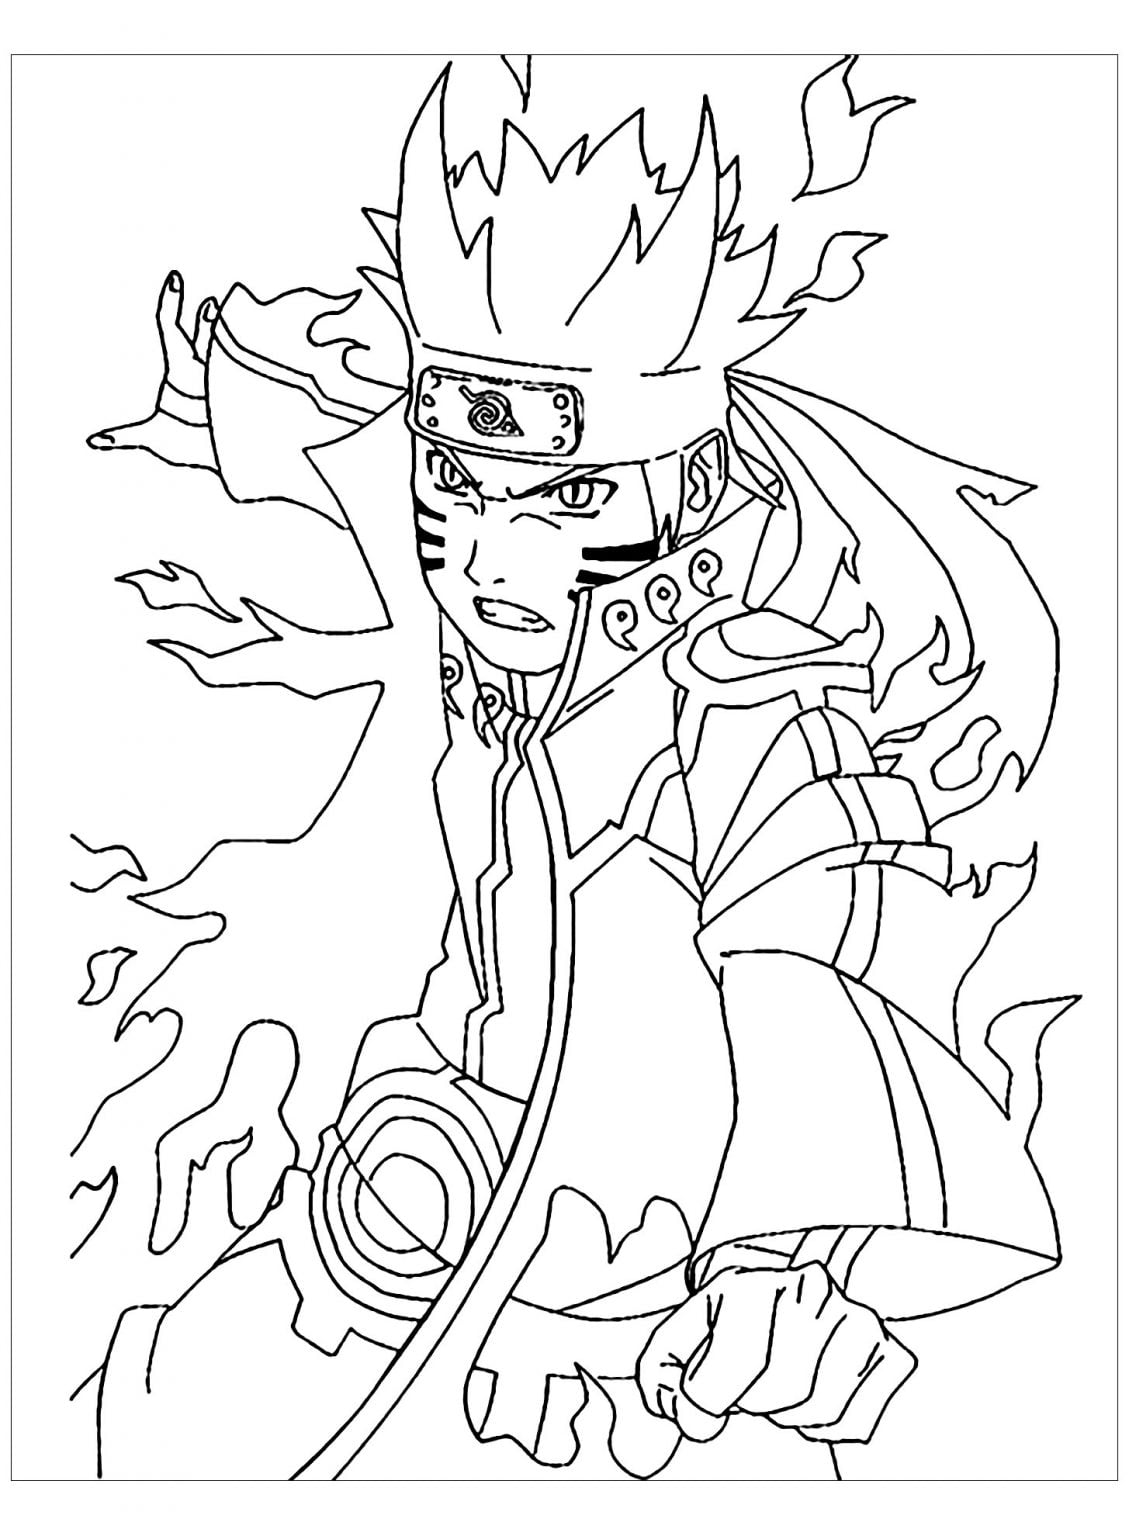 Desenho do Naruto para colorir, imprimir e pintar